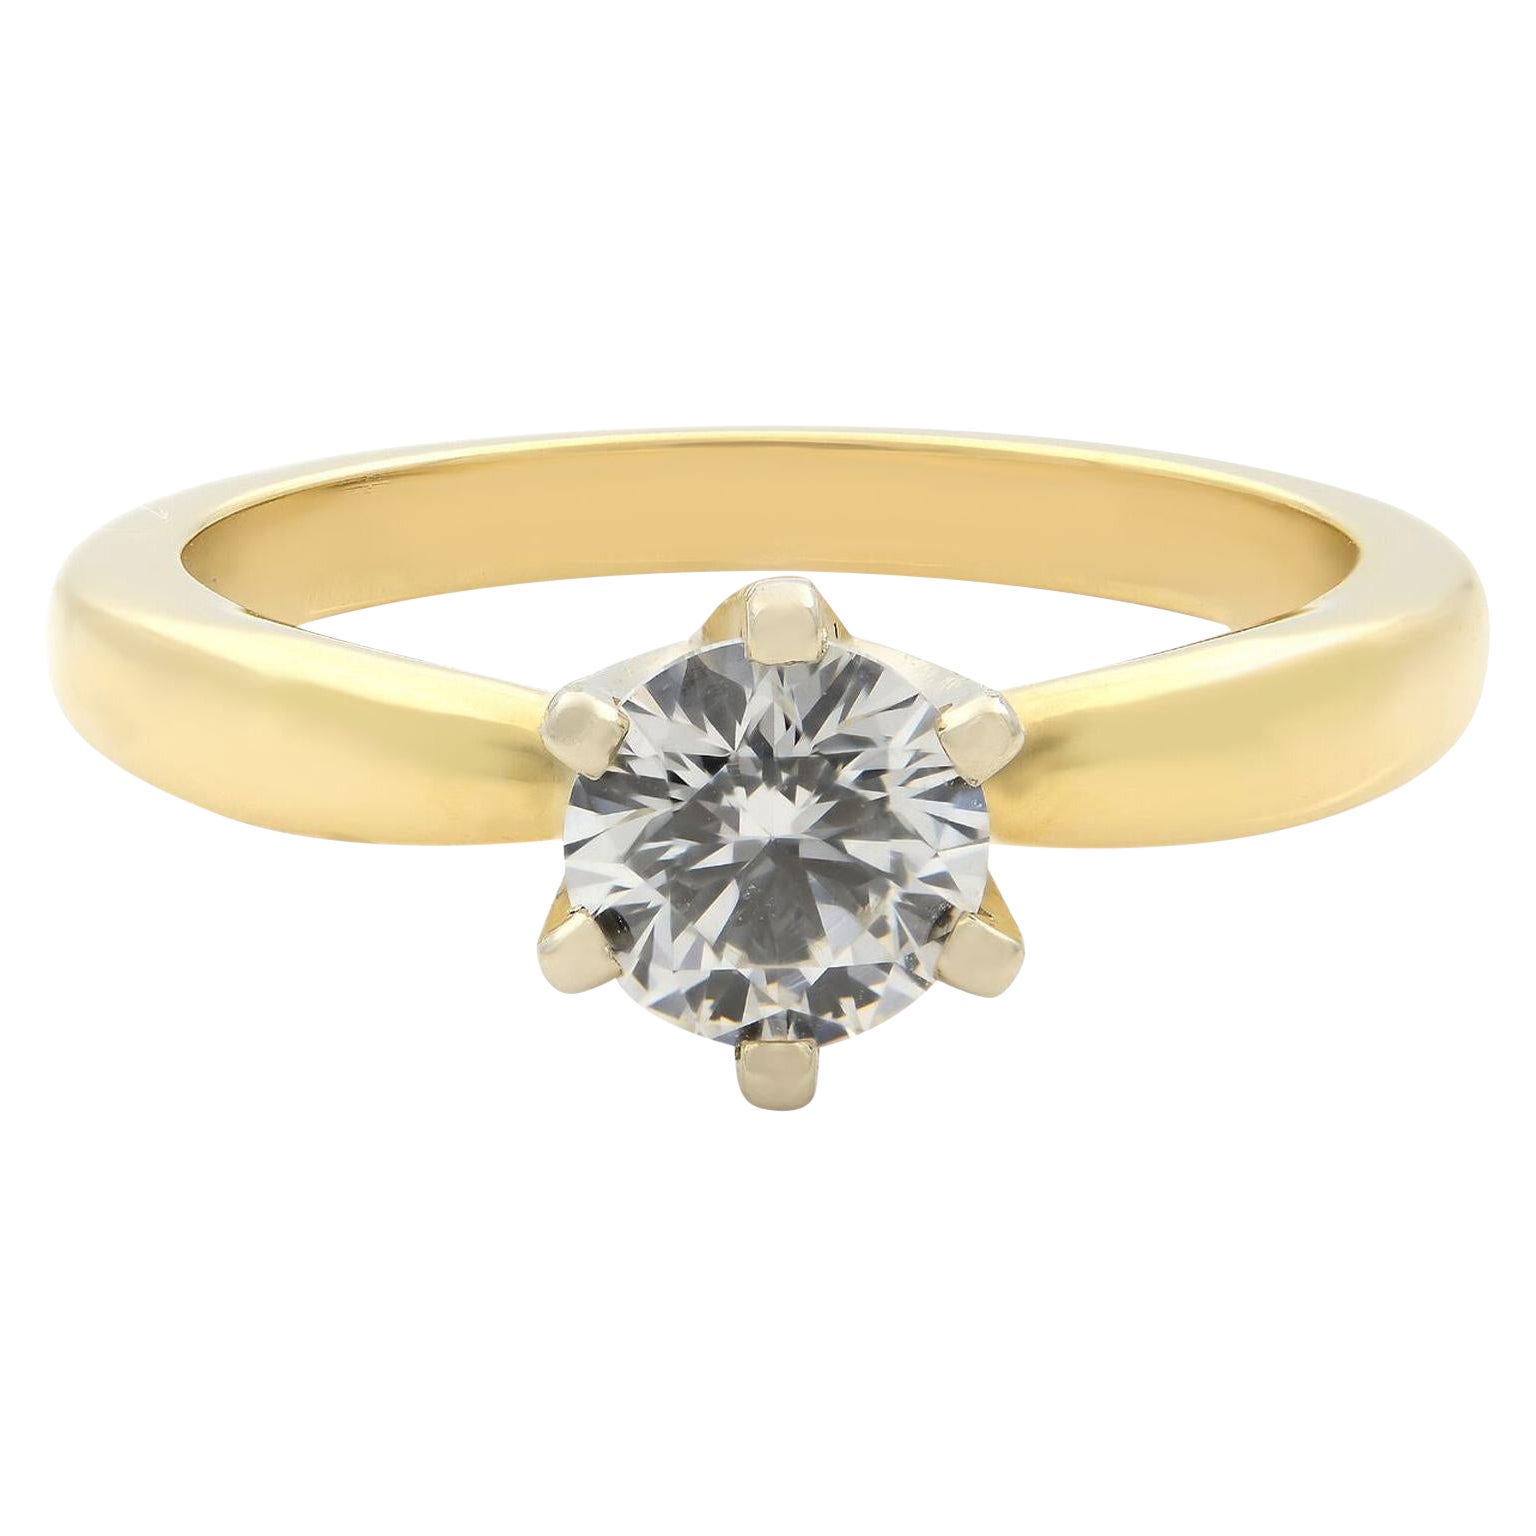 Rachel Koen Diamond Solitaire Engagement Ring 14K Yellow Gold 0.70Cttw For Sale